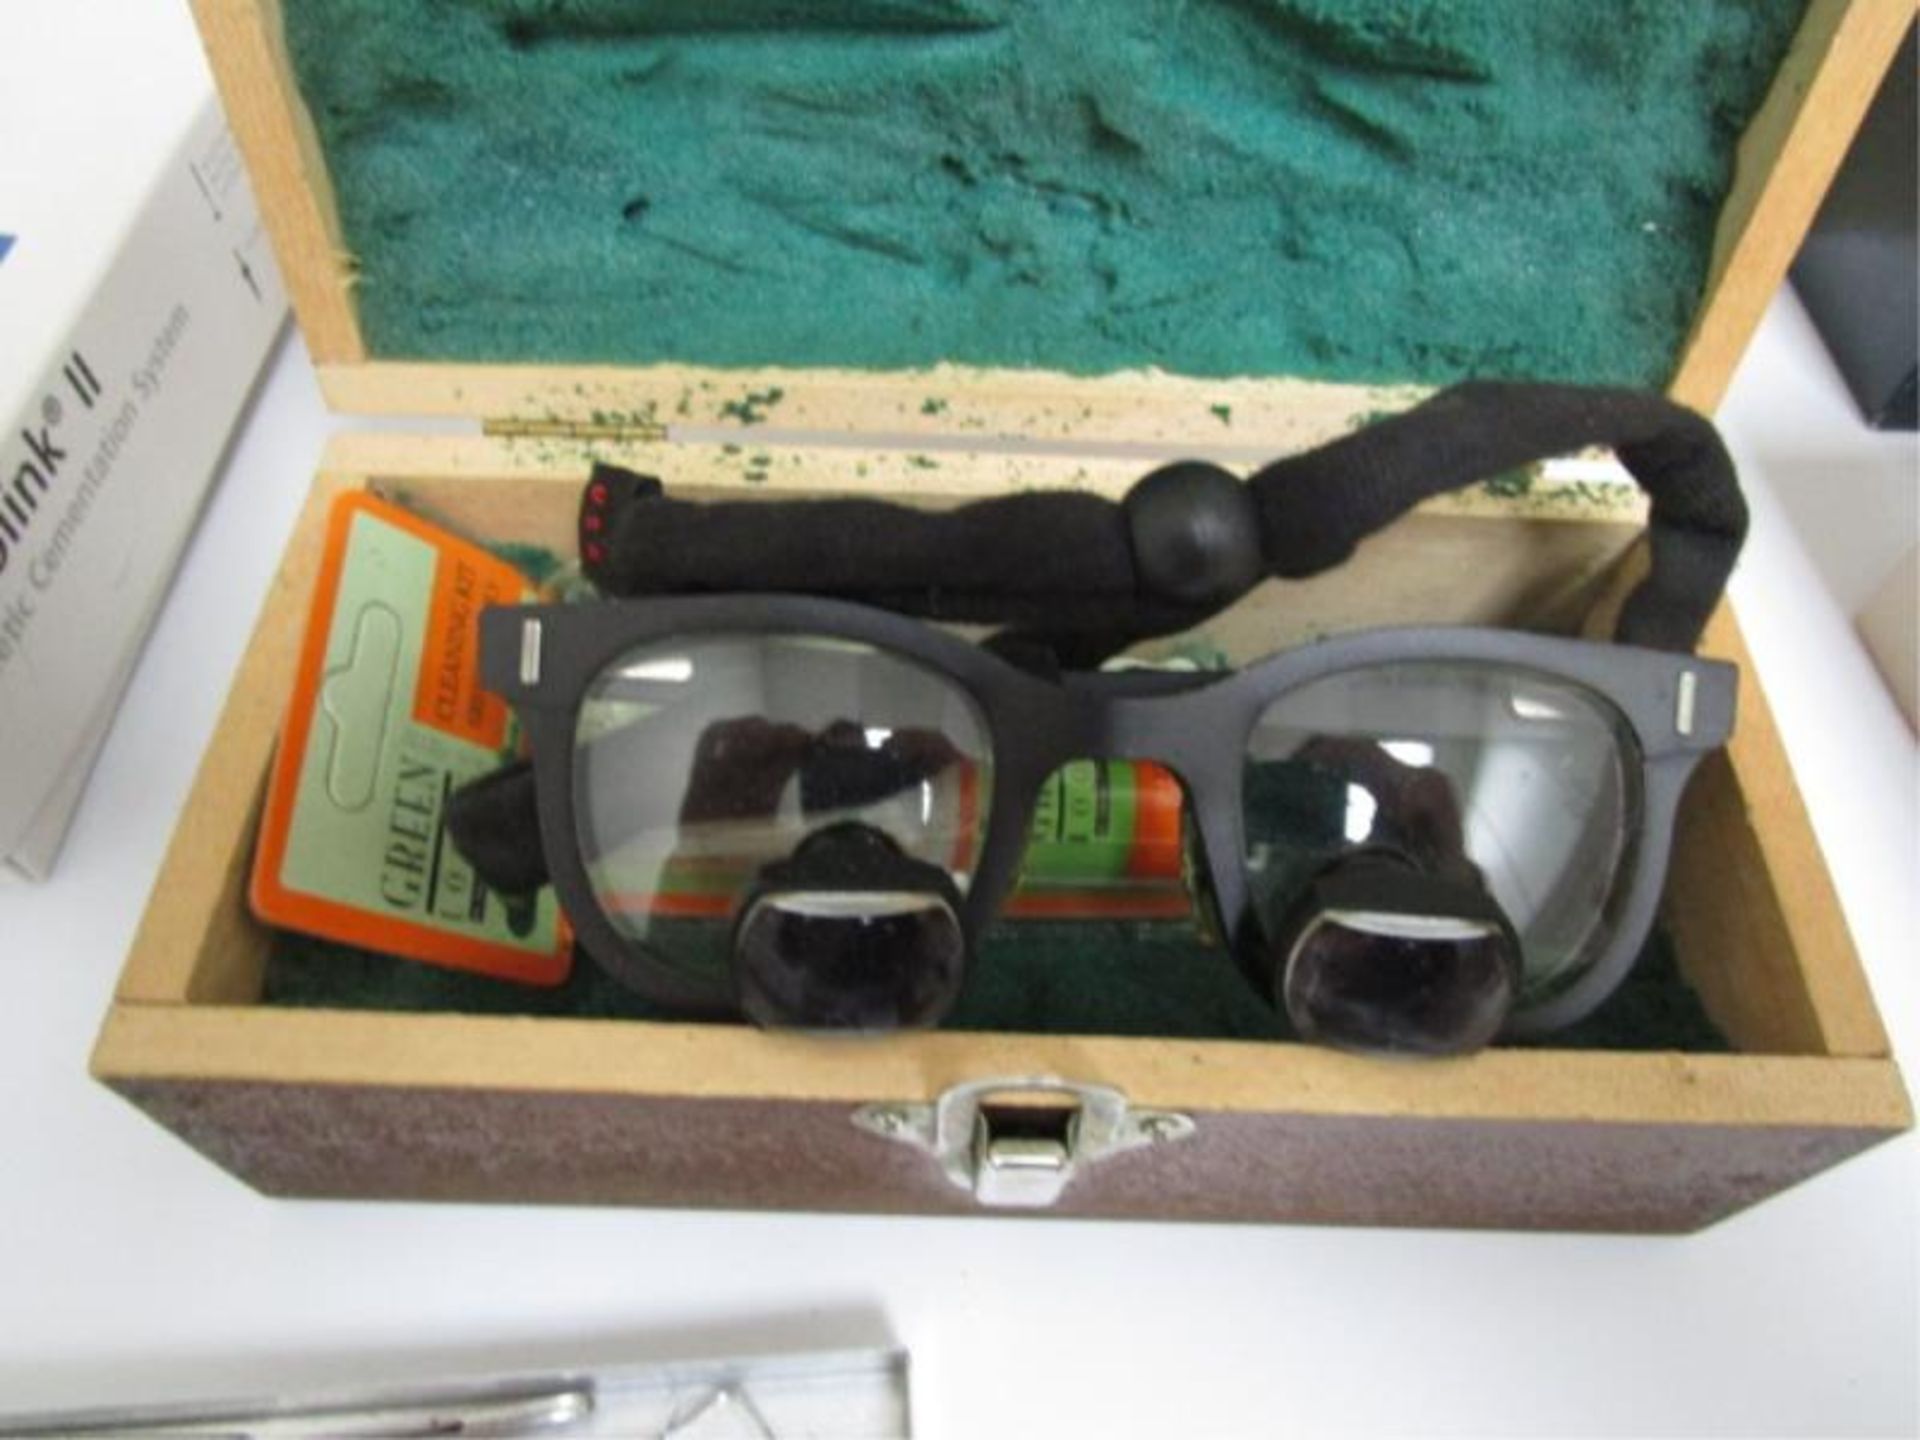 Magnyfing Glasses In Wood Case, Polishing Posts, Endodontic Obturators, Flexofiles, Disc - Image 11 of 11